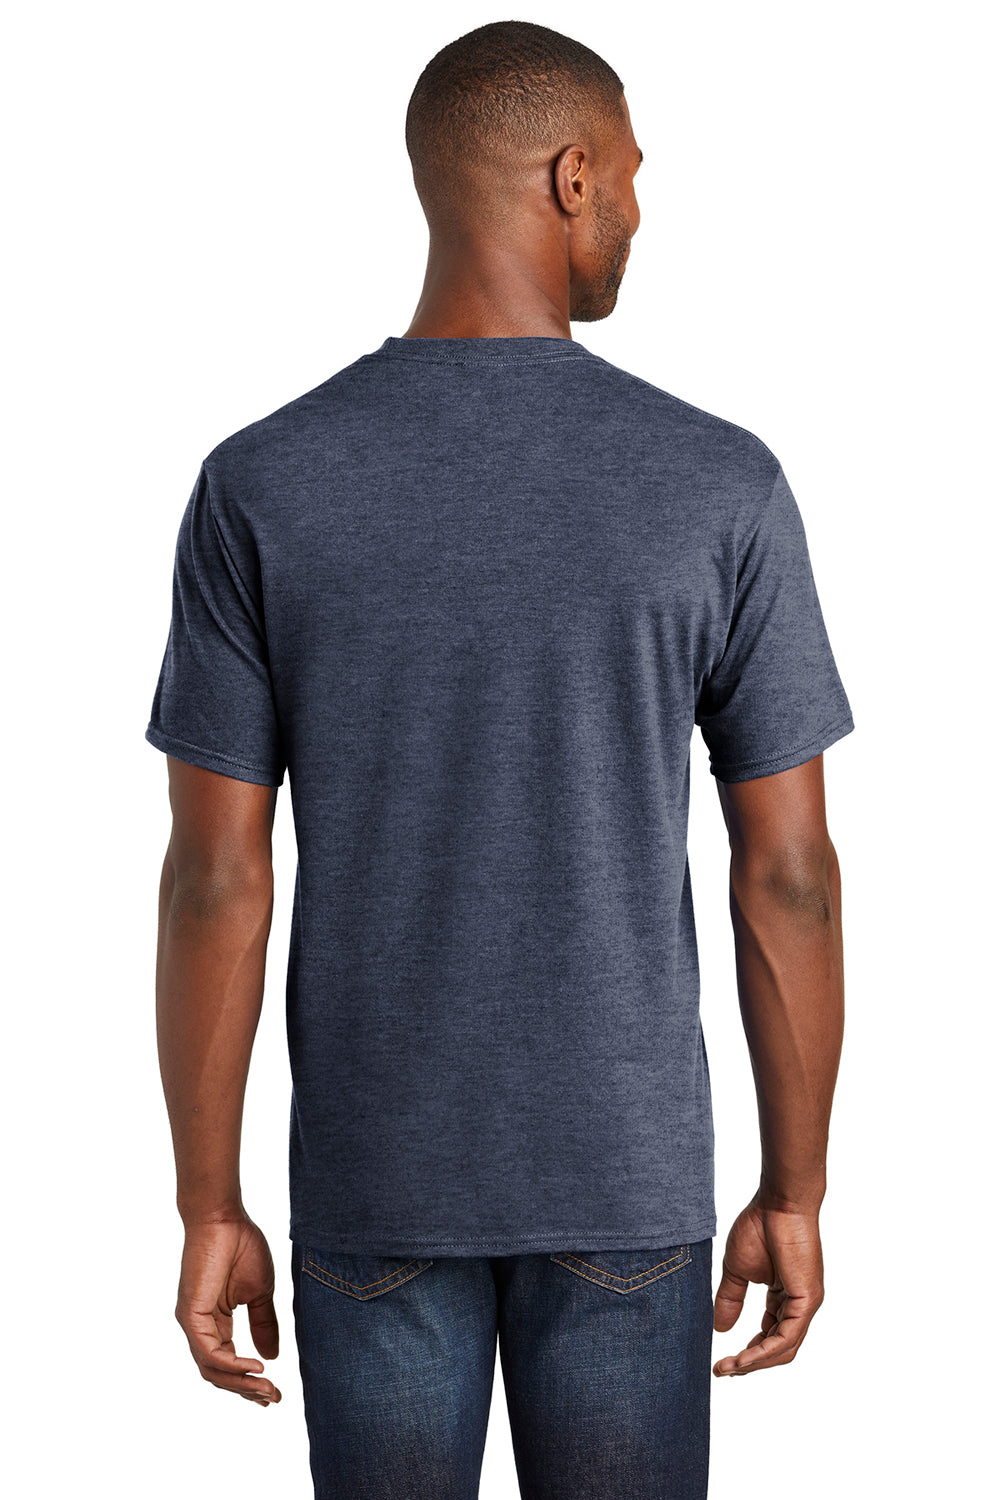 Port & Company PC450 Mens Fan Favorite Short Sleeve Crewneck T-Shirt Heather Navy Blue Back